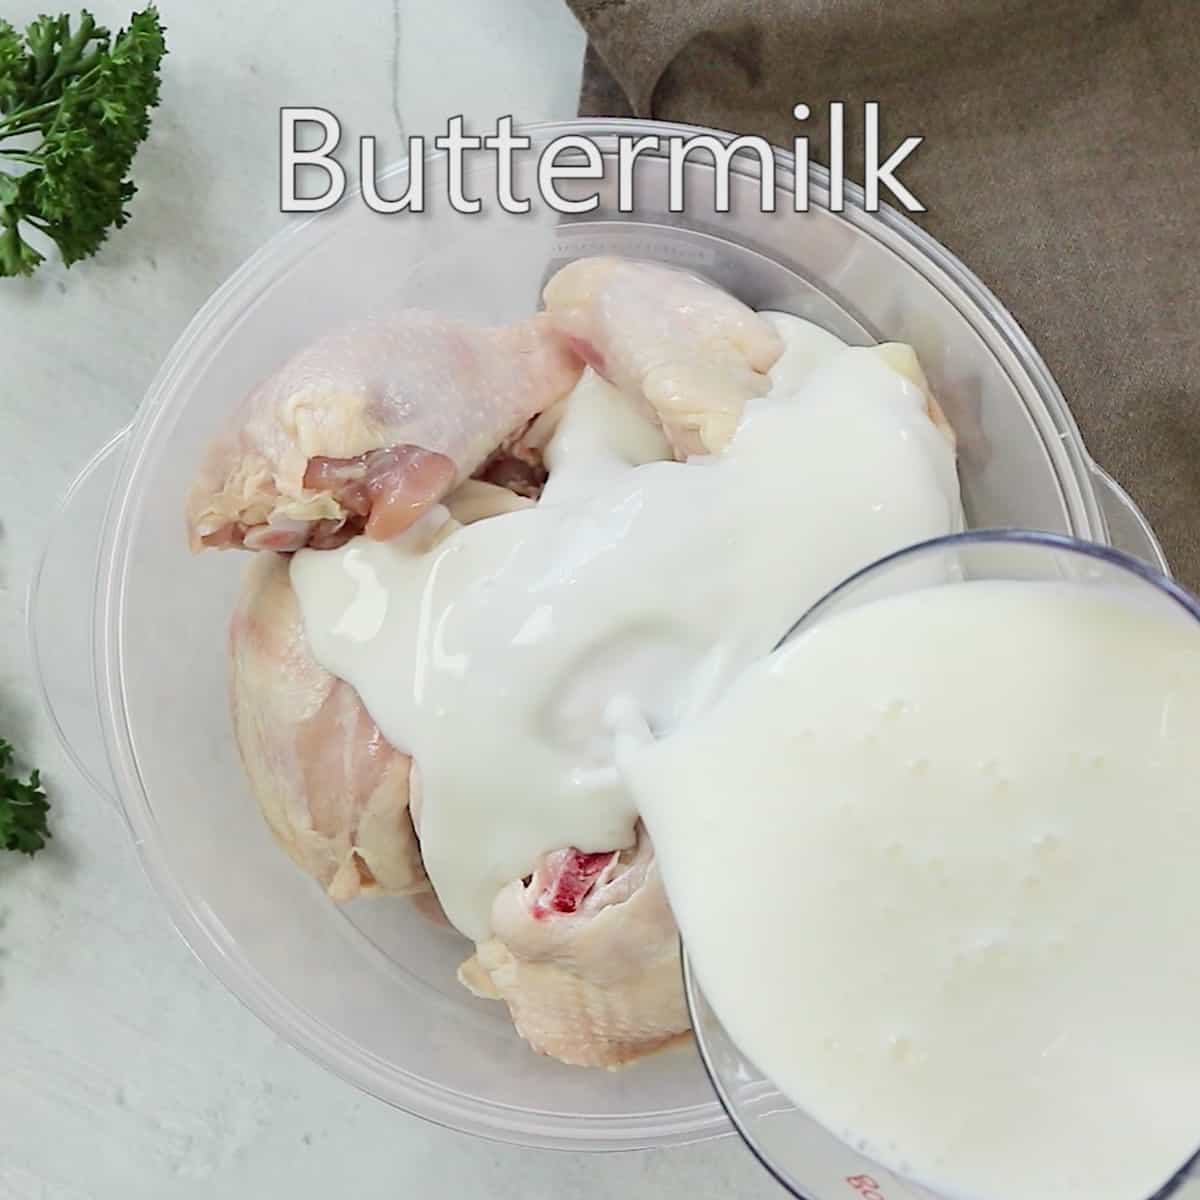 Adding buttermilk to a bowl of chicken.